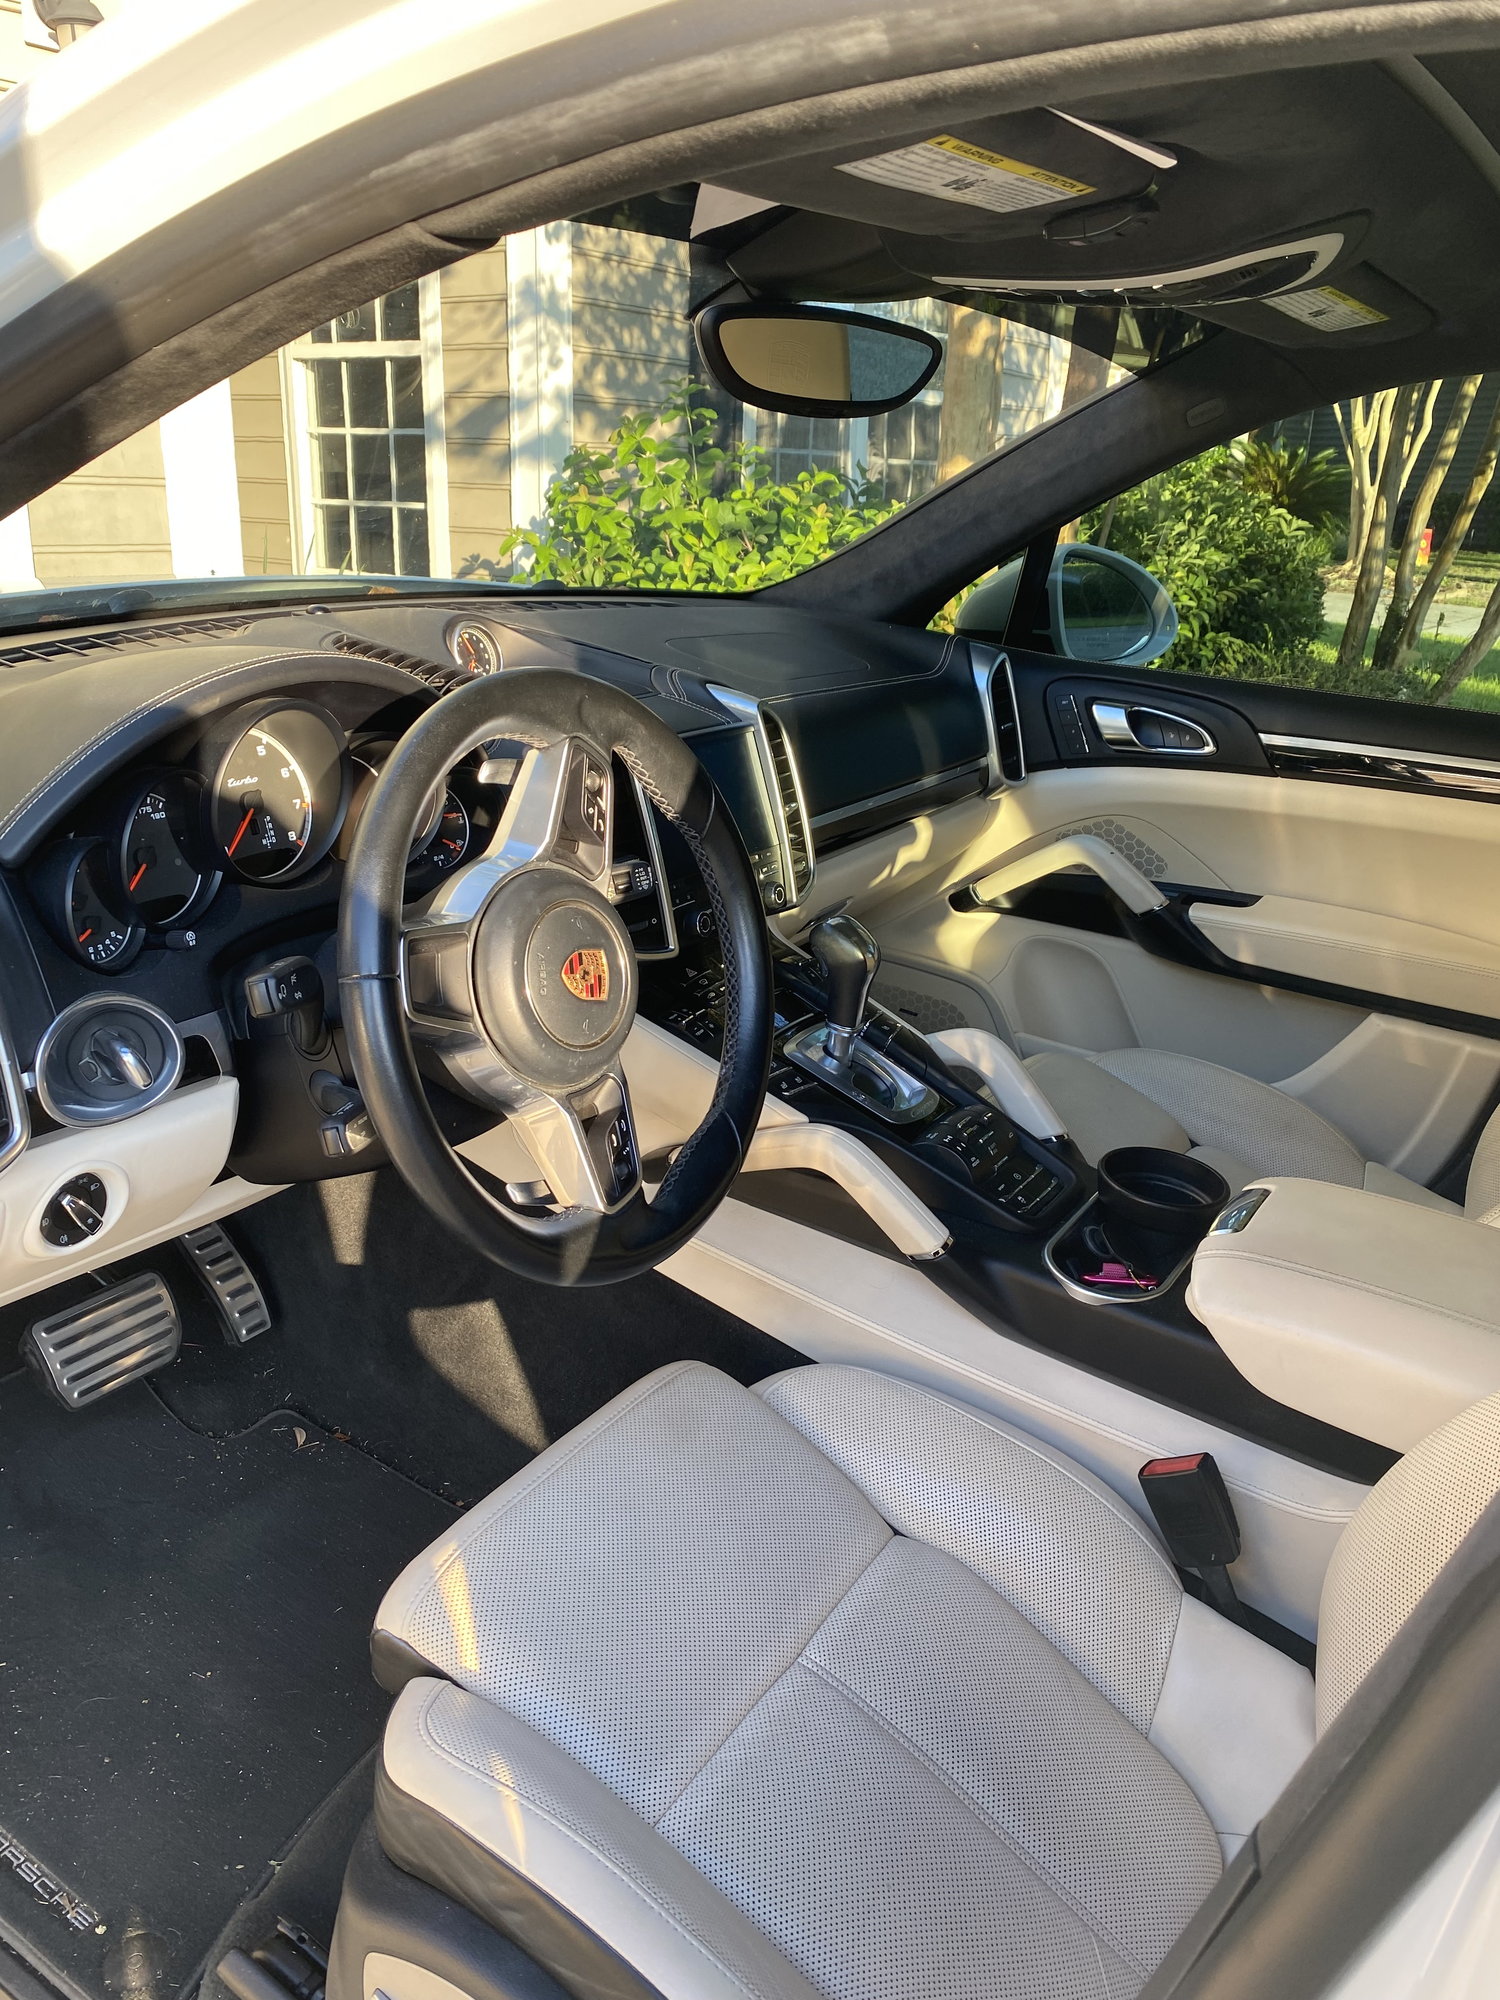 2017 Porsche Cayenne - 2017 Cayenne turbo, 62,000 miles white, cream interior, perfect $51,000.00 no haggle - Used - VIN WP1AC2A20HLA92629 - 62,000 Miles - White - Charleston, SC 29466, United States